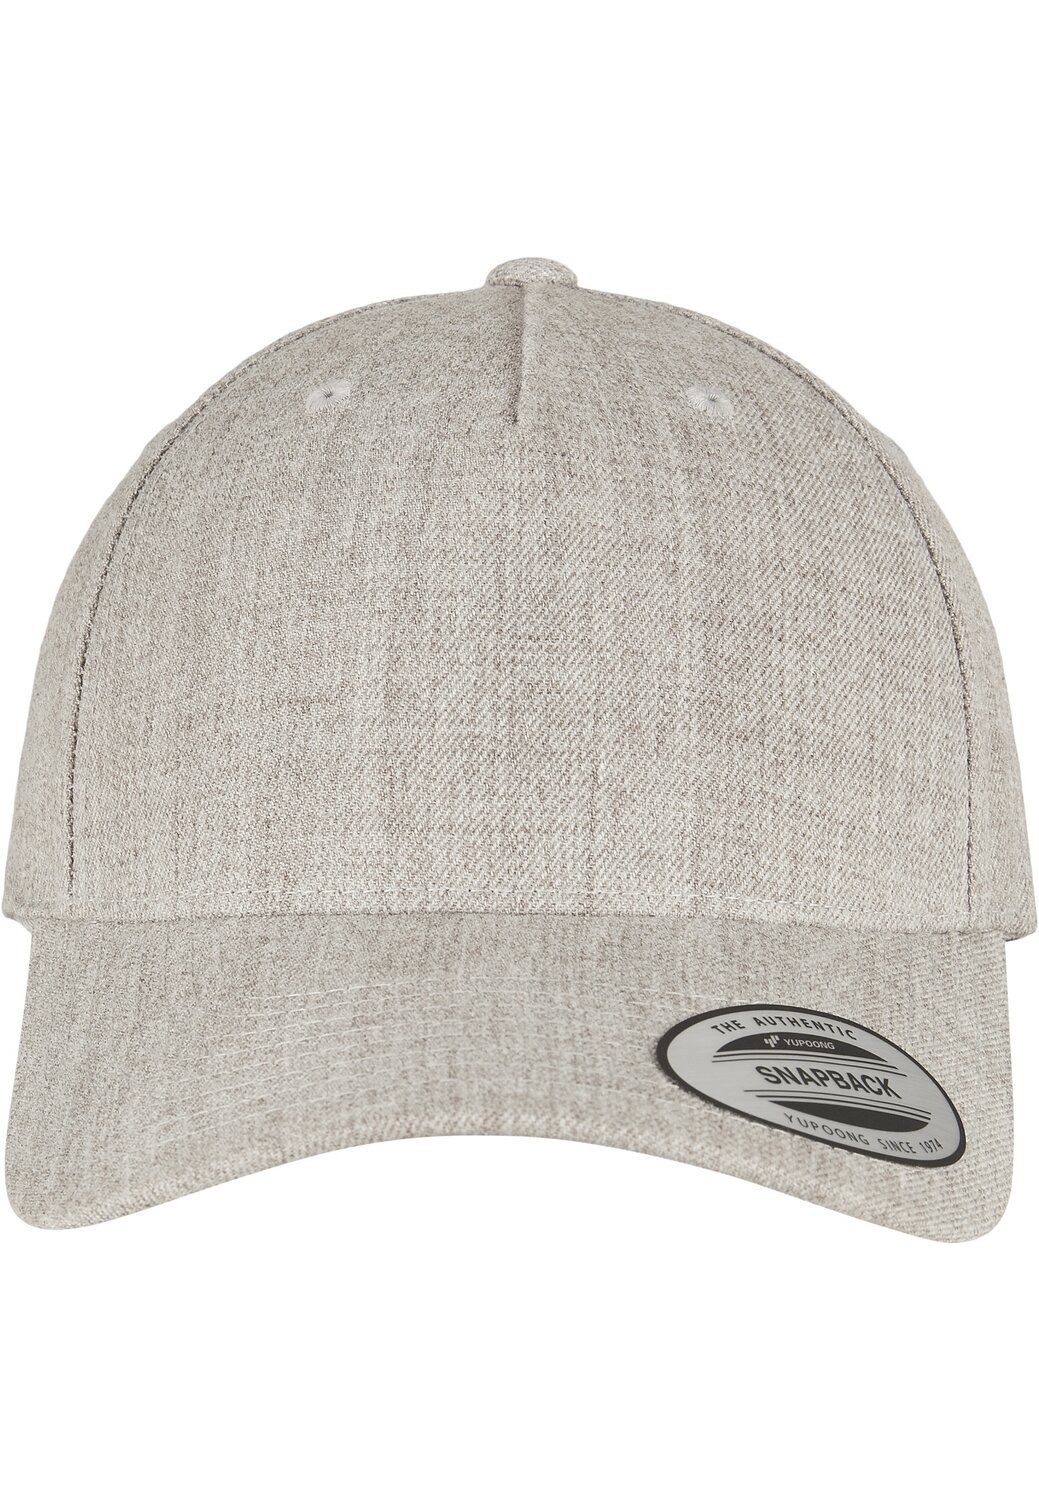 Snapback Cap 5-Panel Premium curved visor Flexfit heather grey | MAXISCOOT